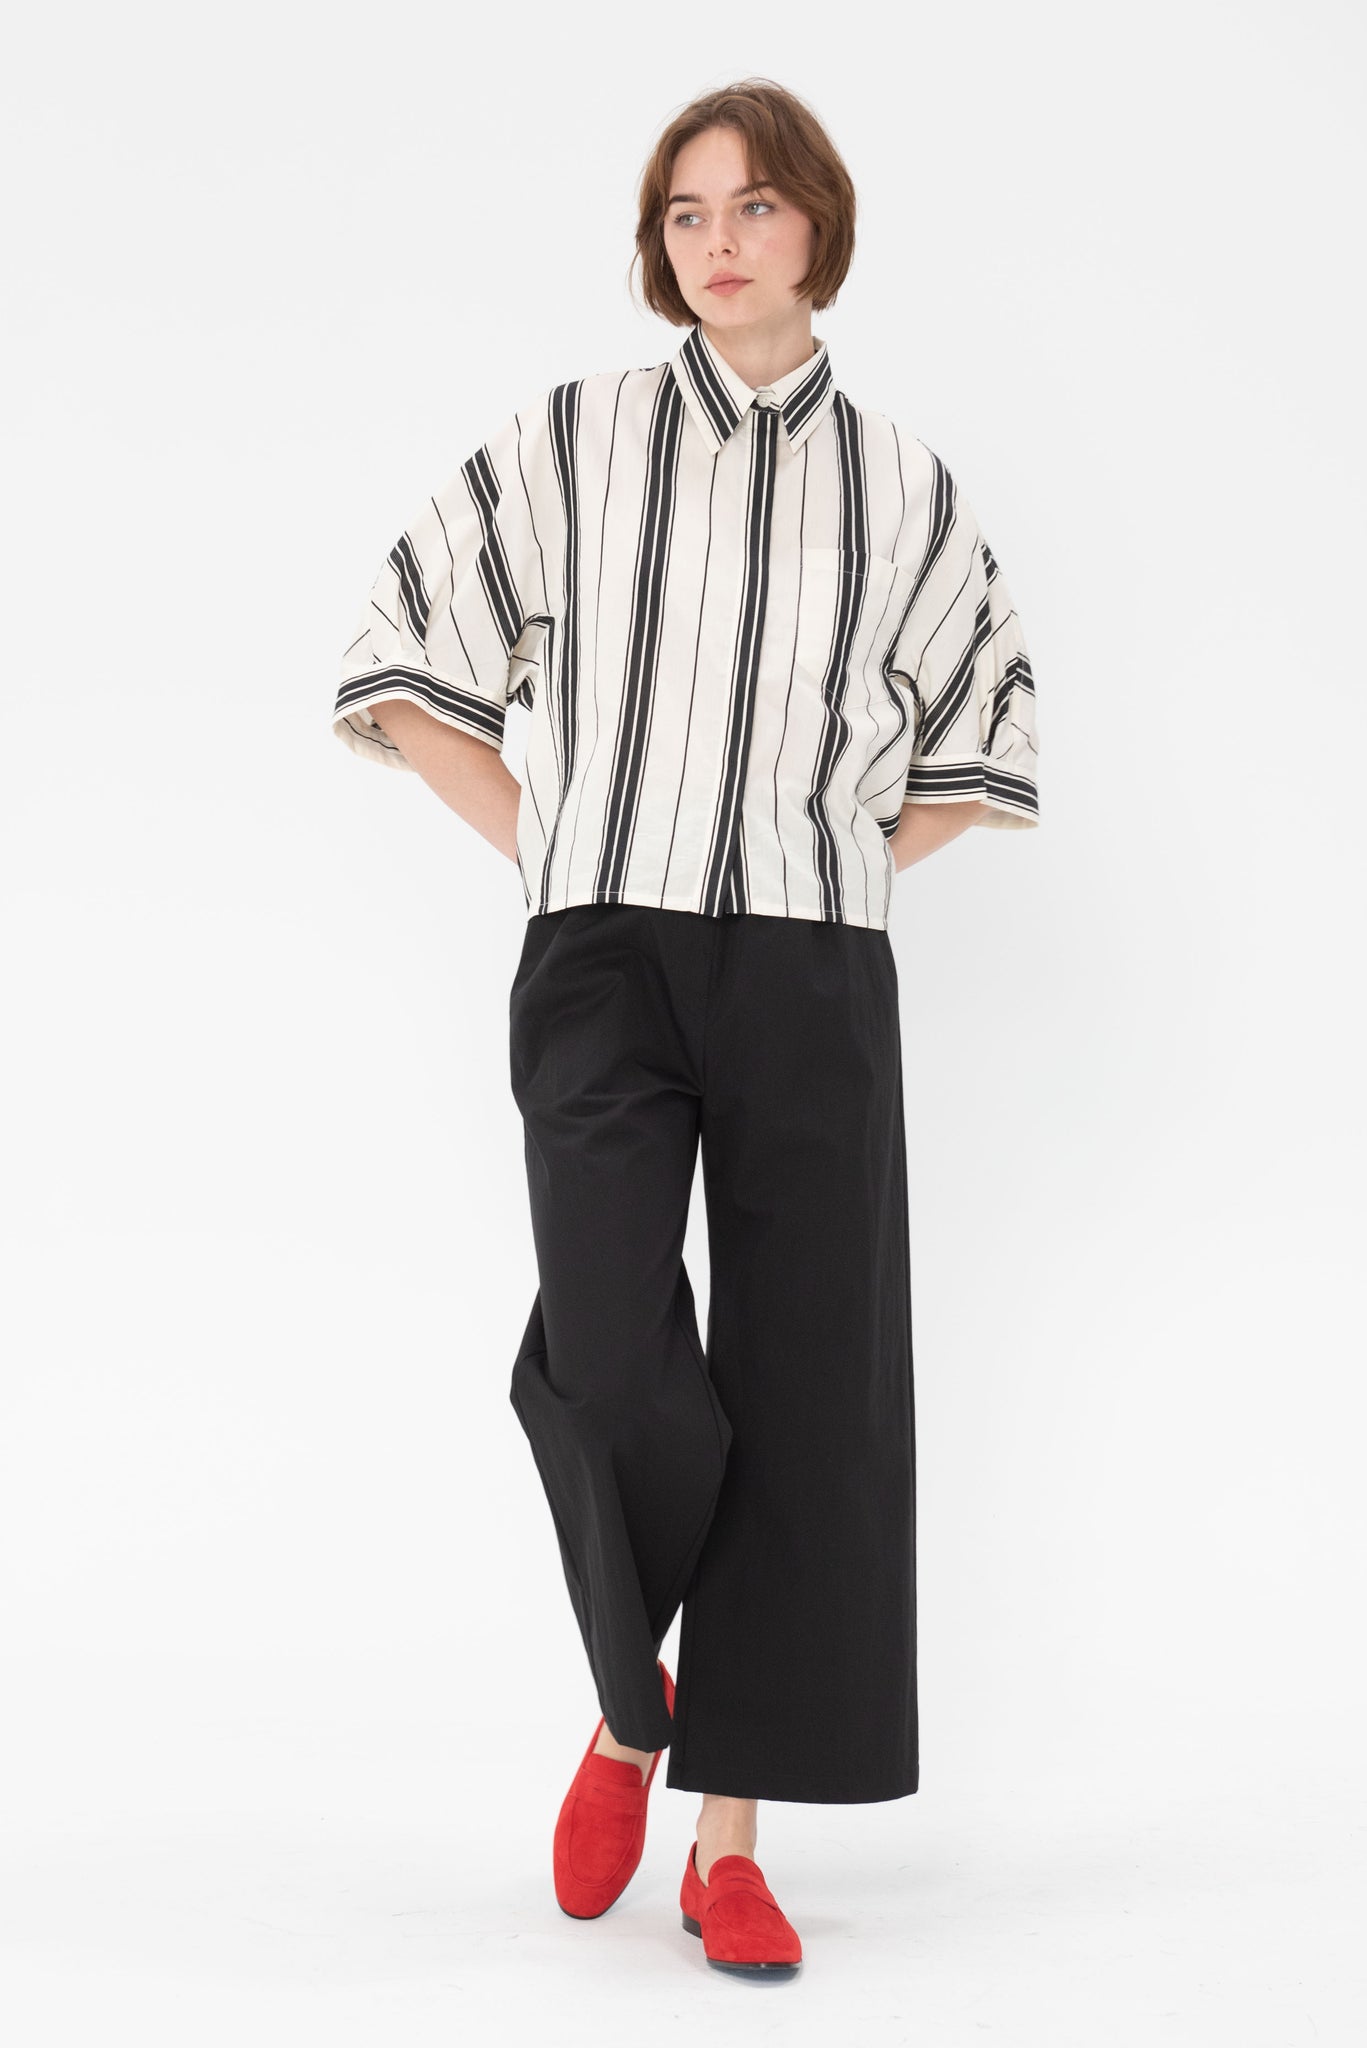 Christian Wijnants - Taka Boxy Shirt, White & Black Stripes